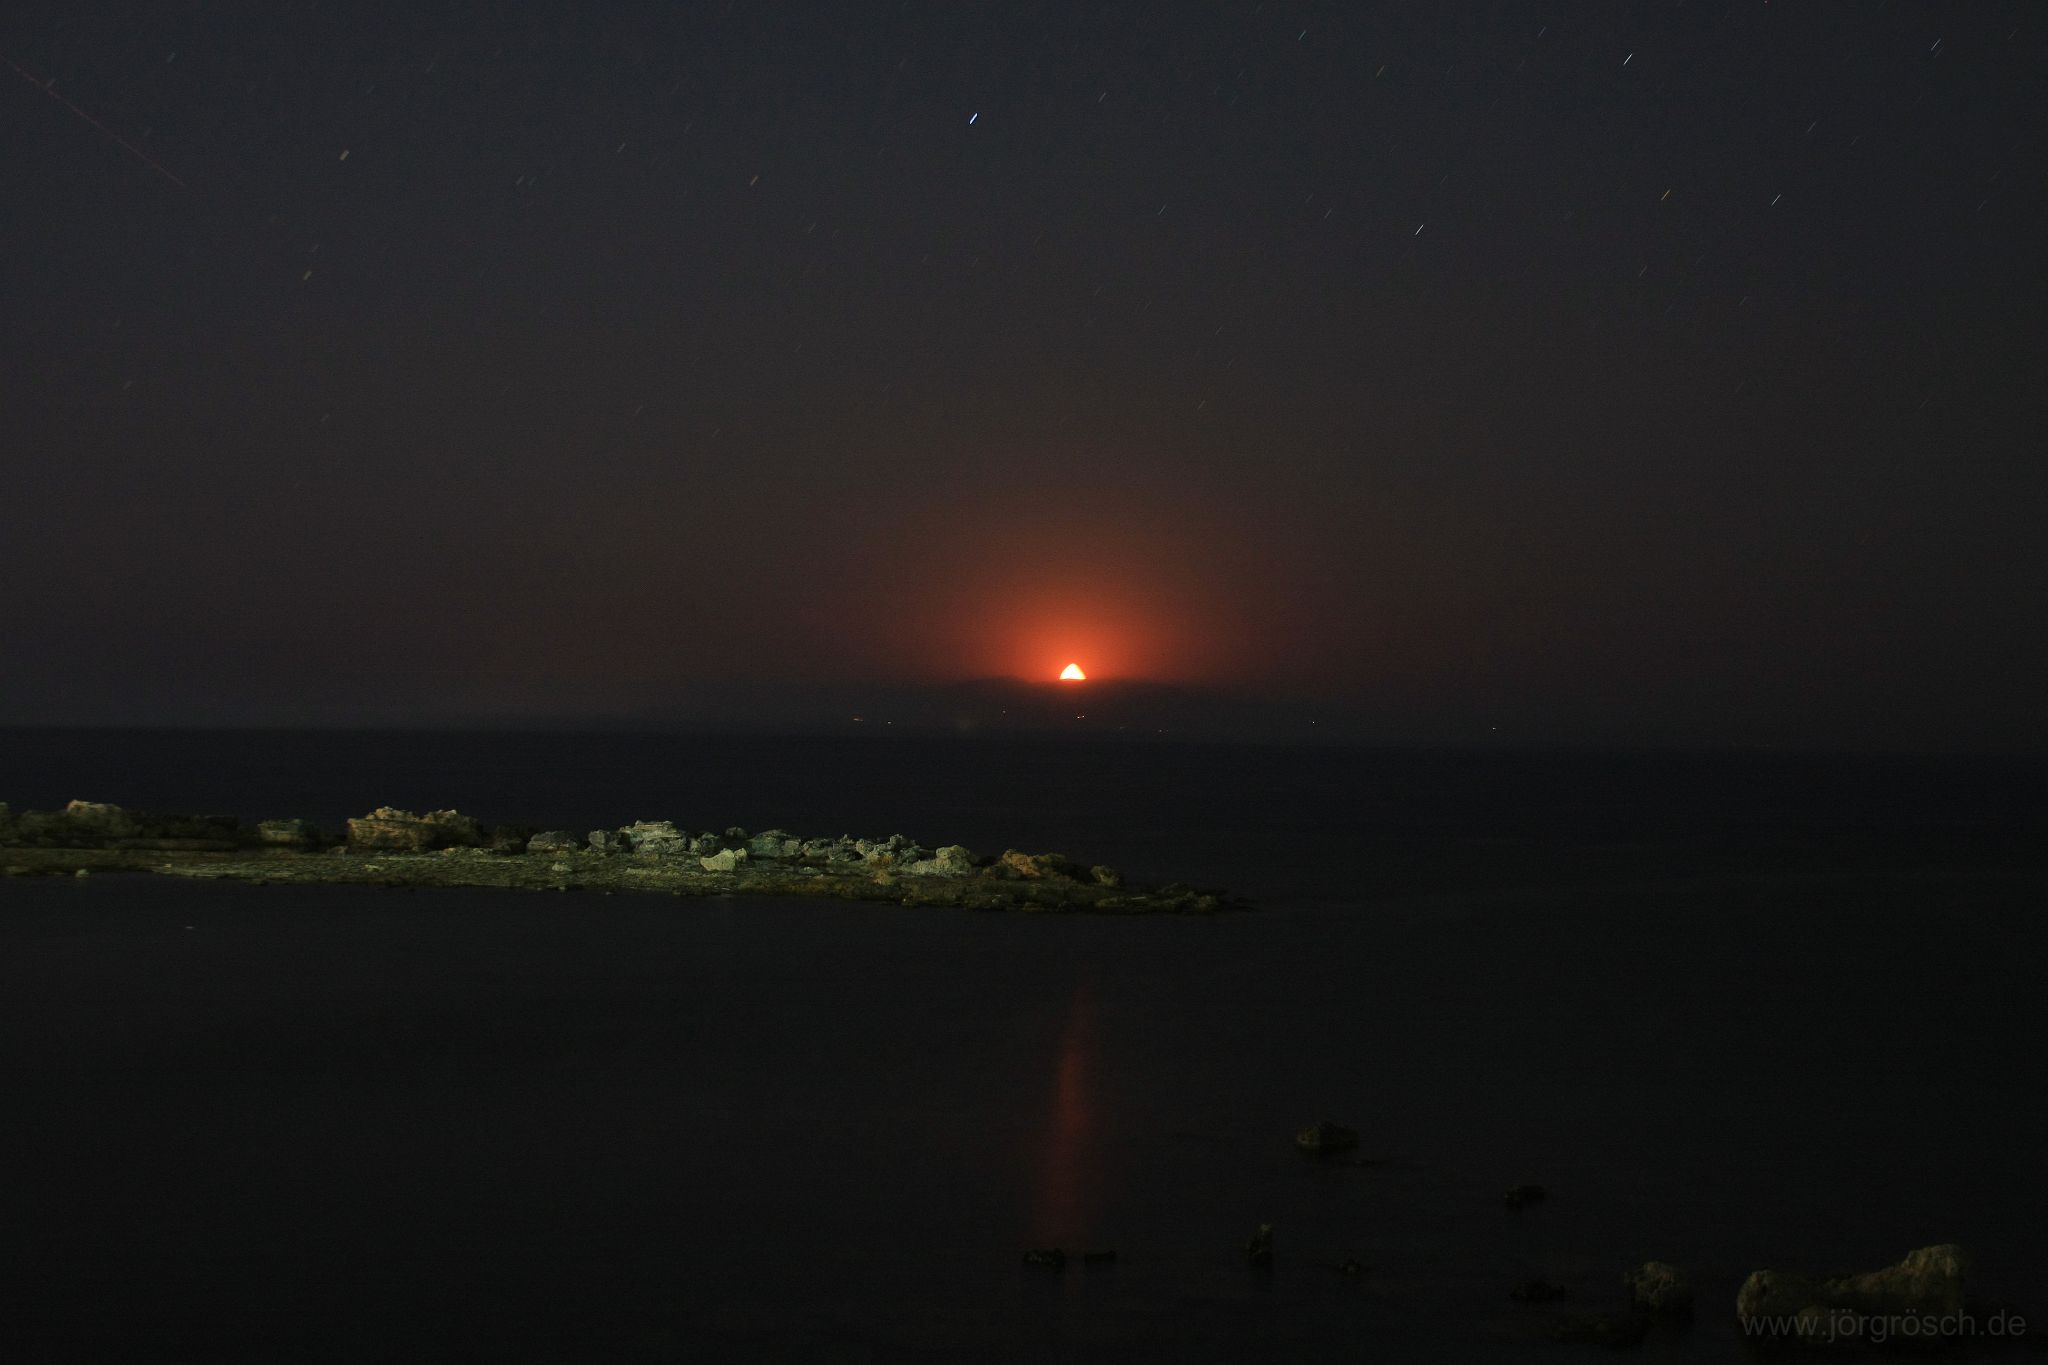 20130727-2-mondaufgang.jpg - Mondaufgang über dem Mittelmeer bei Kallithea / Καλλιθέα